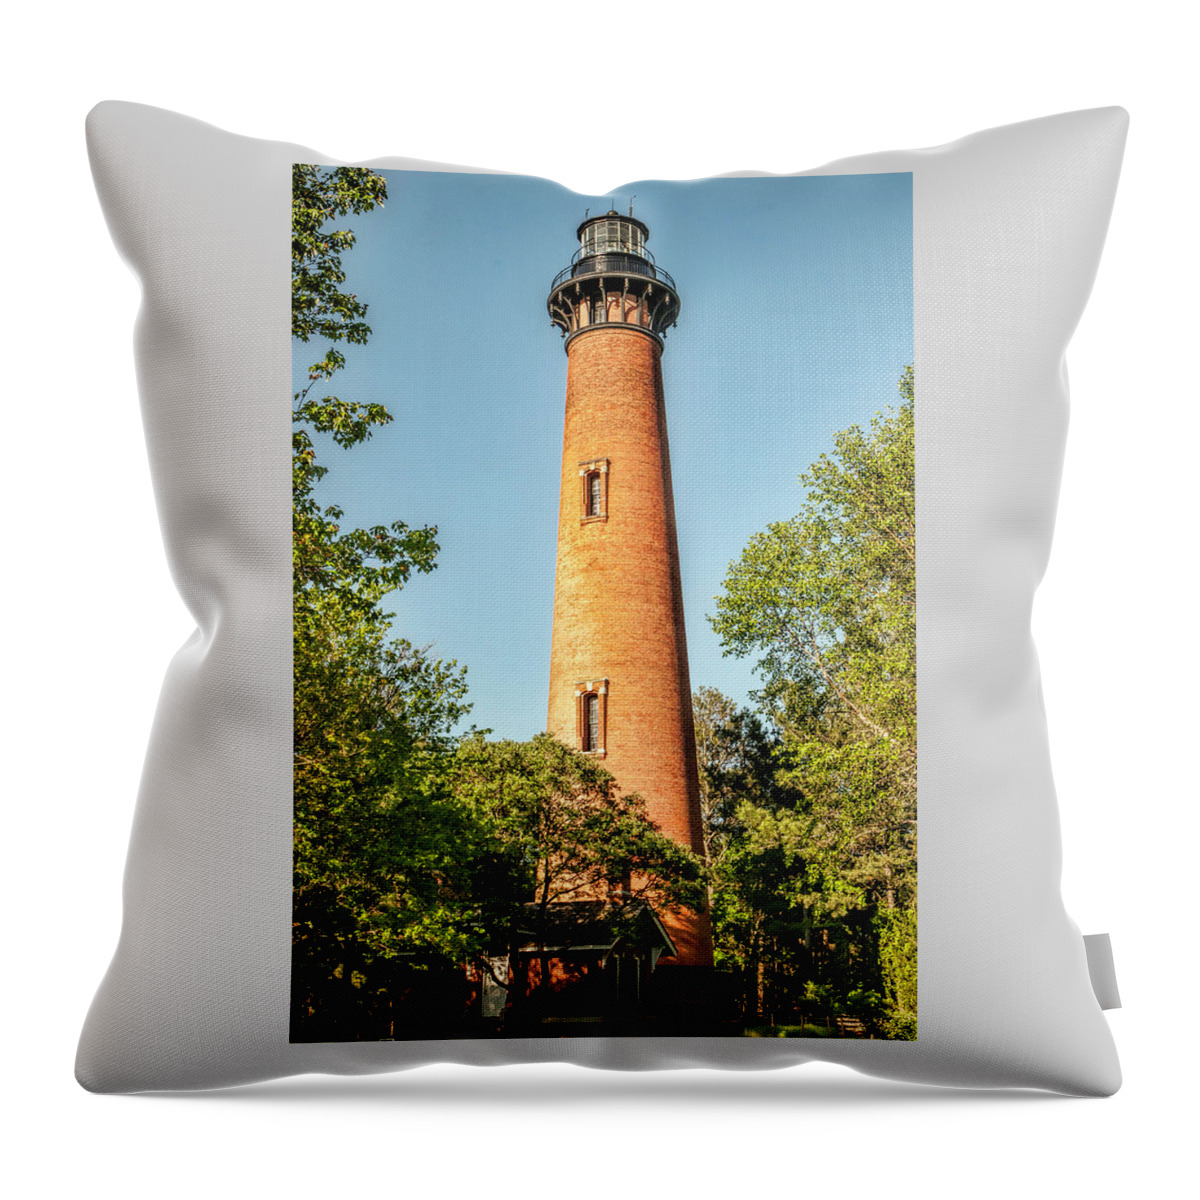 Currituck Beach Lighthouse Throw Pillow featuring the photograph Currituck Beach Lighthouse by Phyllis Taylor